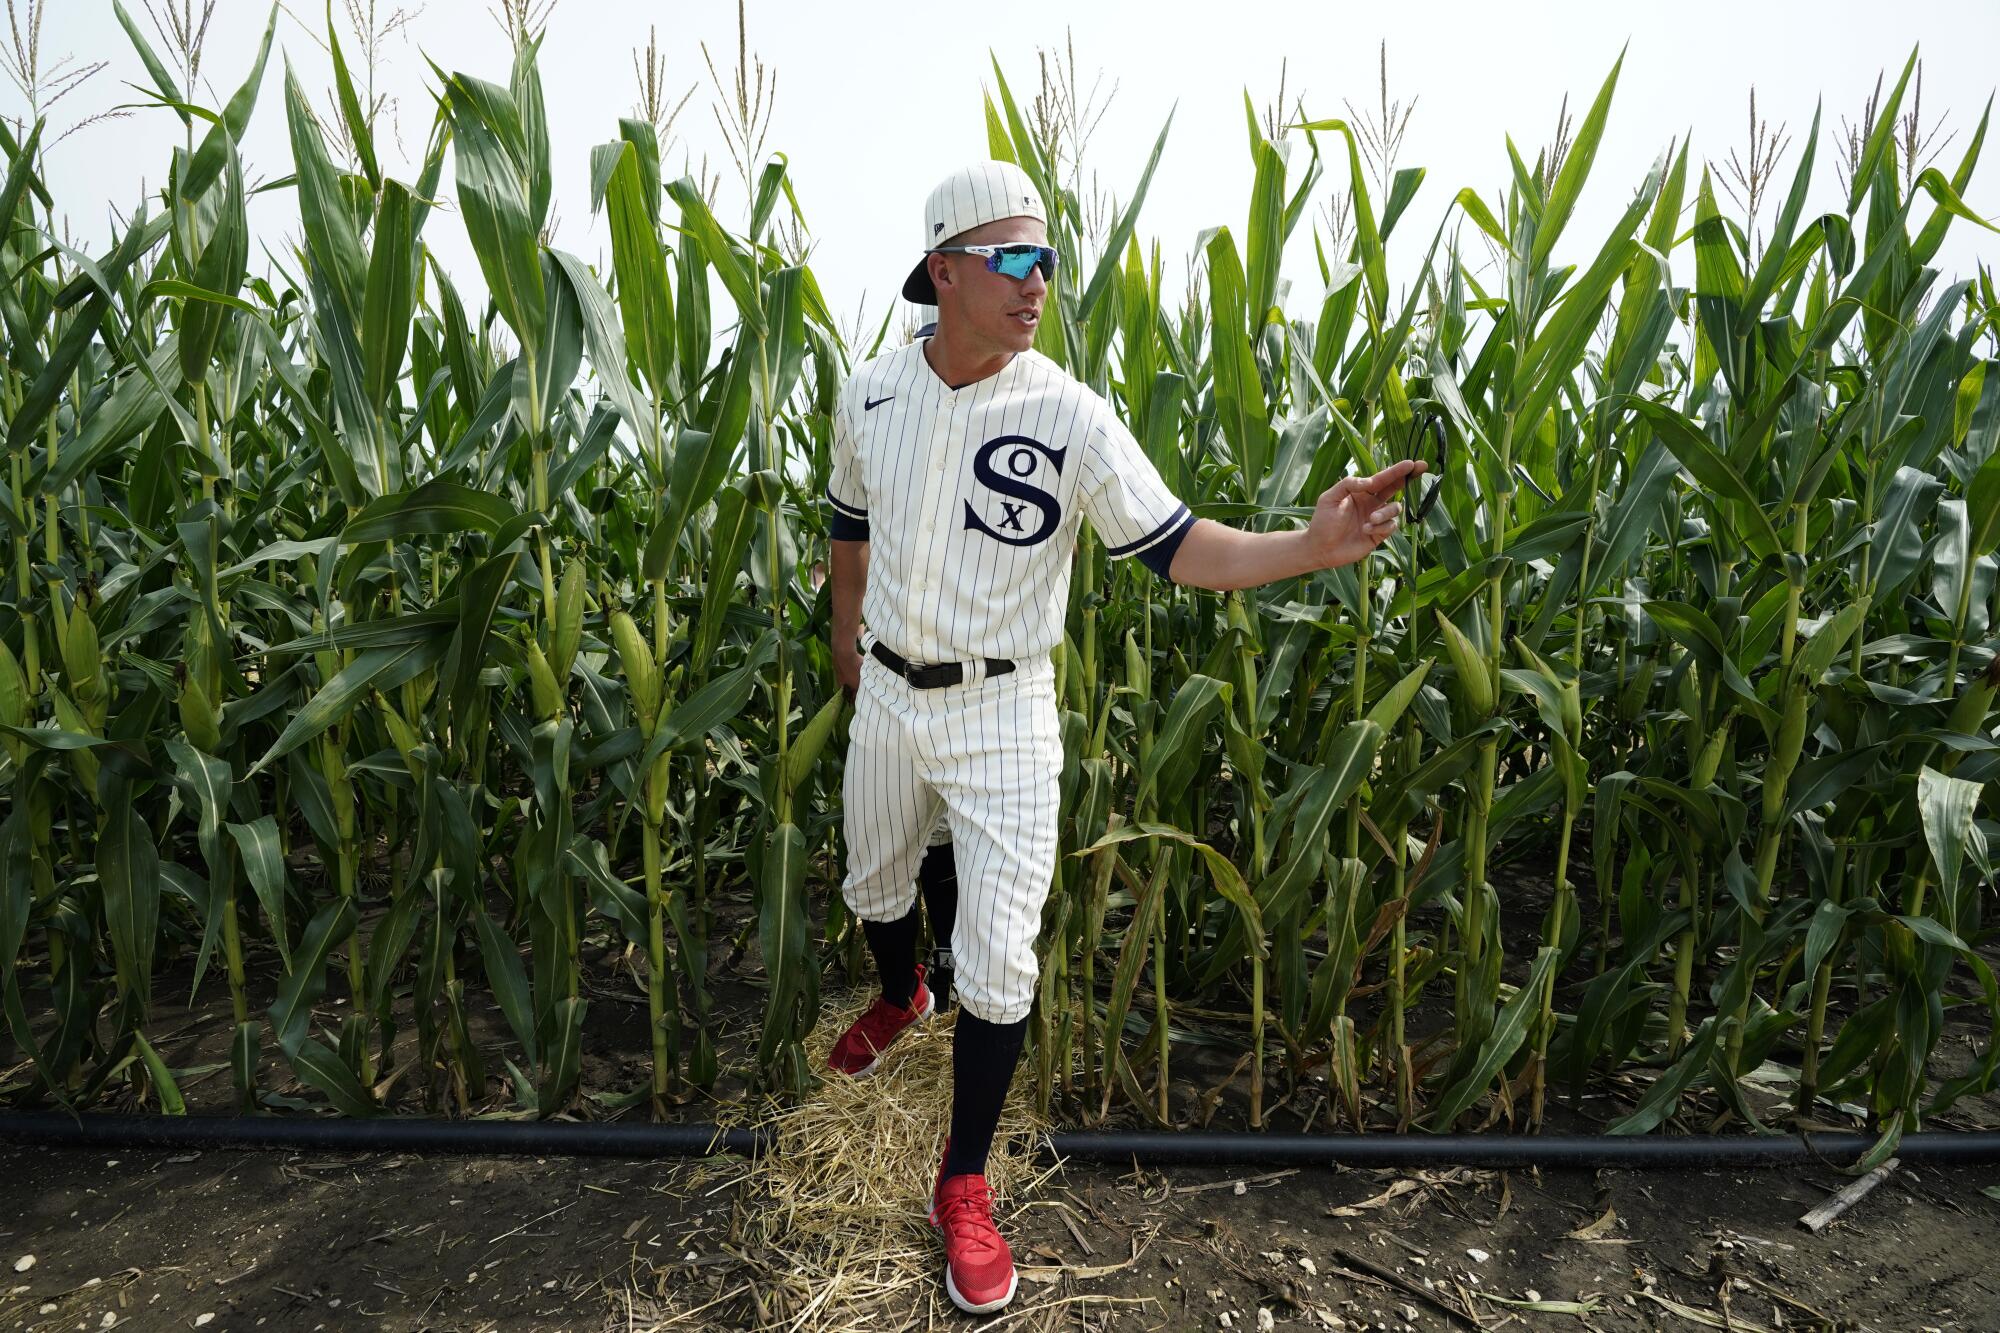 Watch: White Sox's Jose Abreu hits home run into corn during